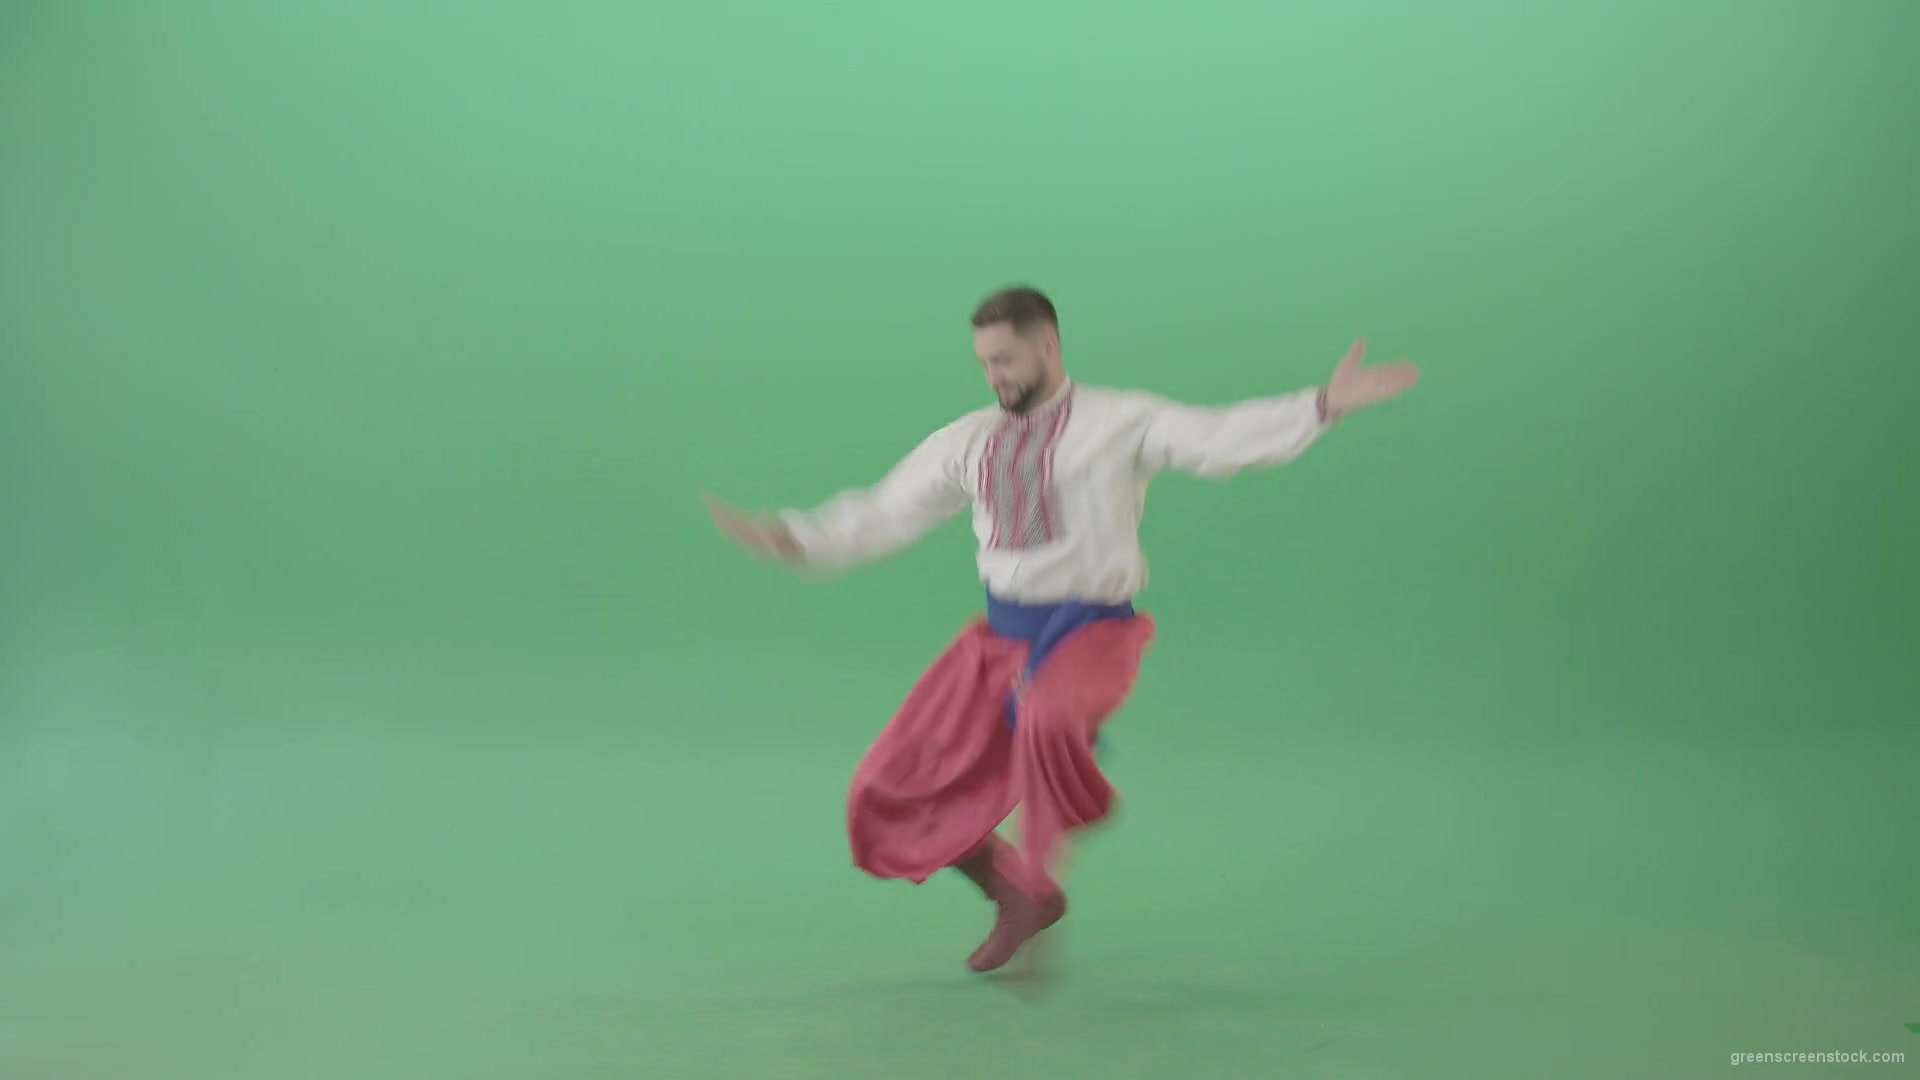 Cossack-Dance-Hopak-by-Ukrainian-Man-isolated-on-Green-Screen-4K-Video-Footage-1920_006 Green Screen Stock